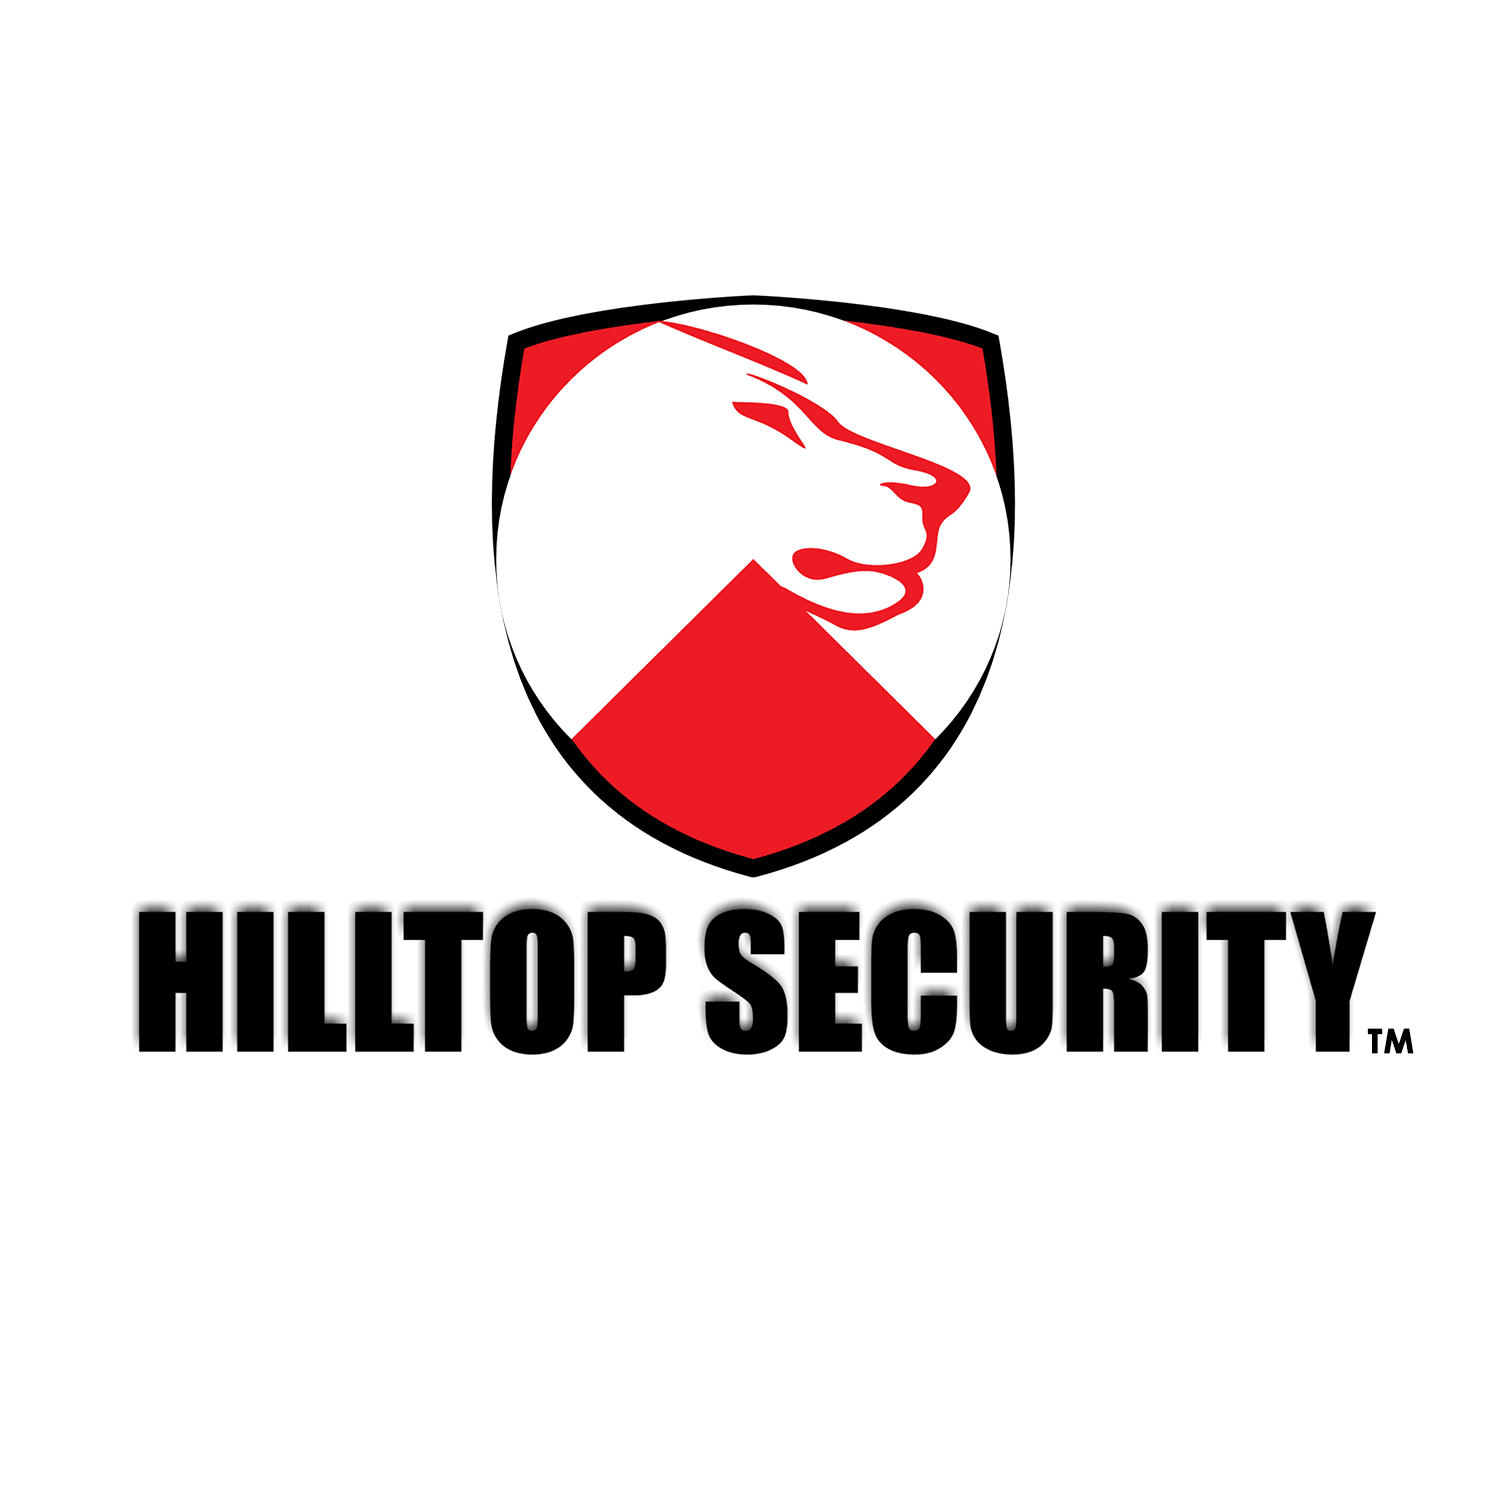 Hilltop Security